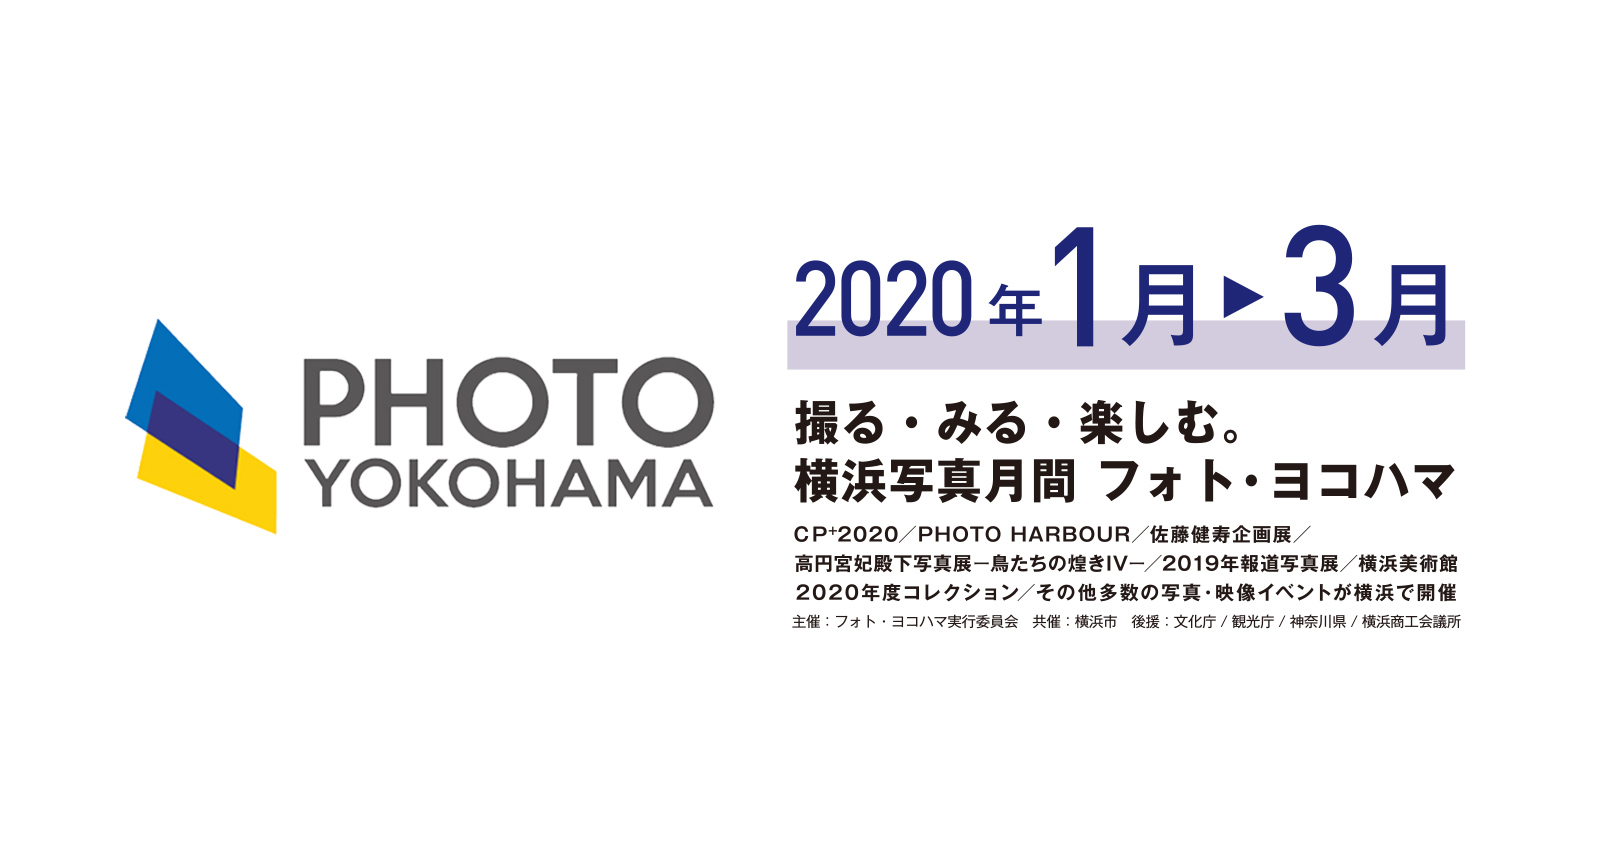 PHOTO YOKOHAMA 2020